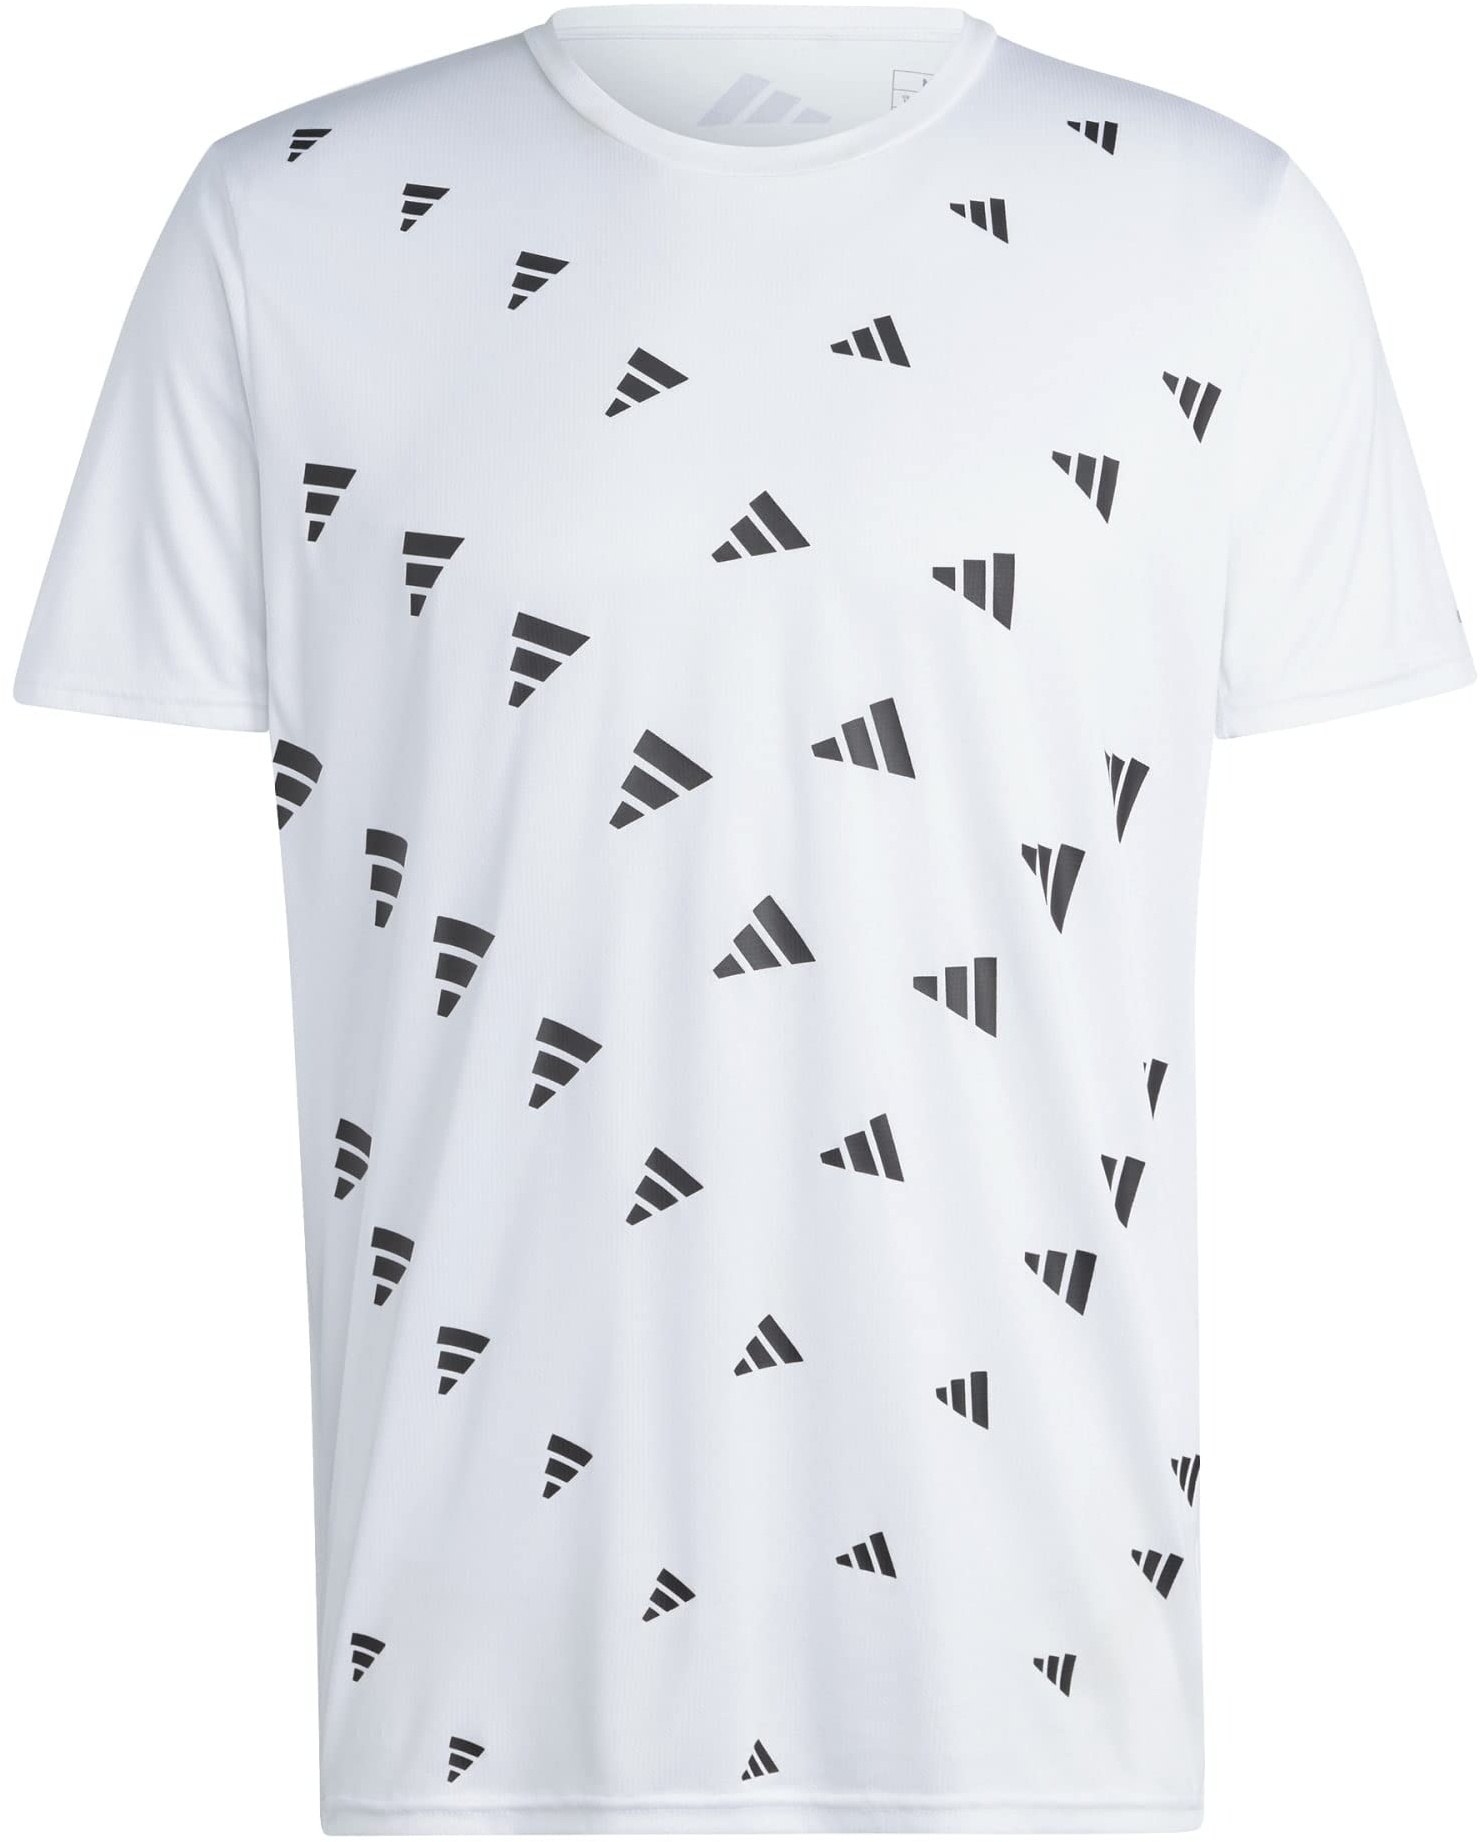 Adidas Herren Shirt (Short Sleeve) Brand Love Tee, White/Black, HR3255, S